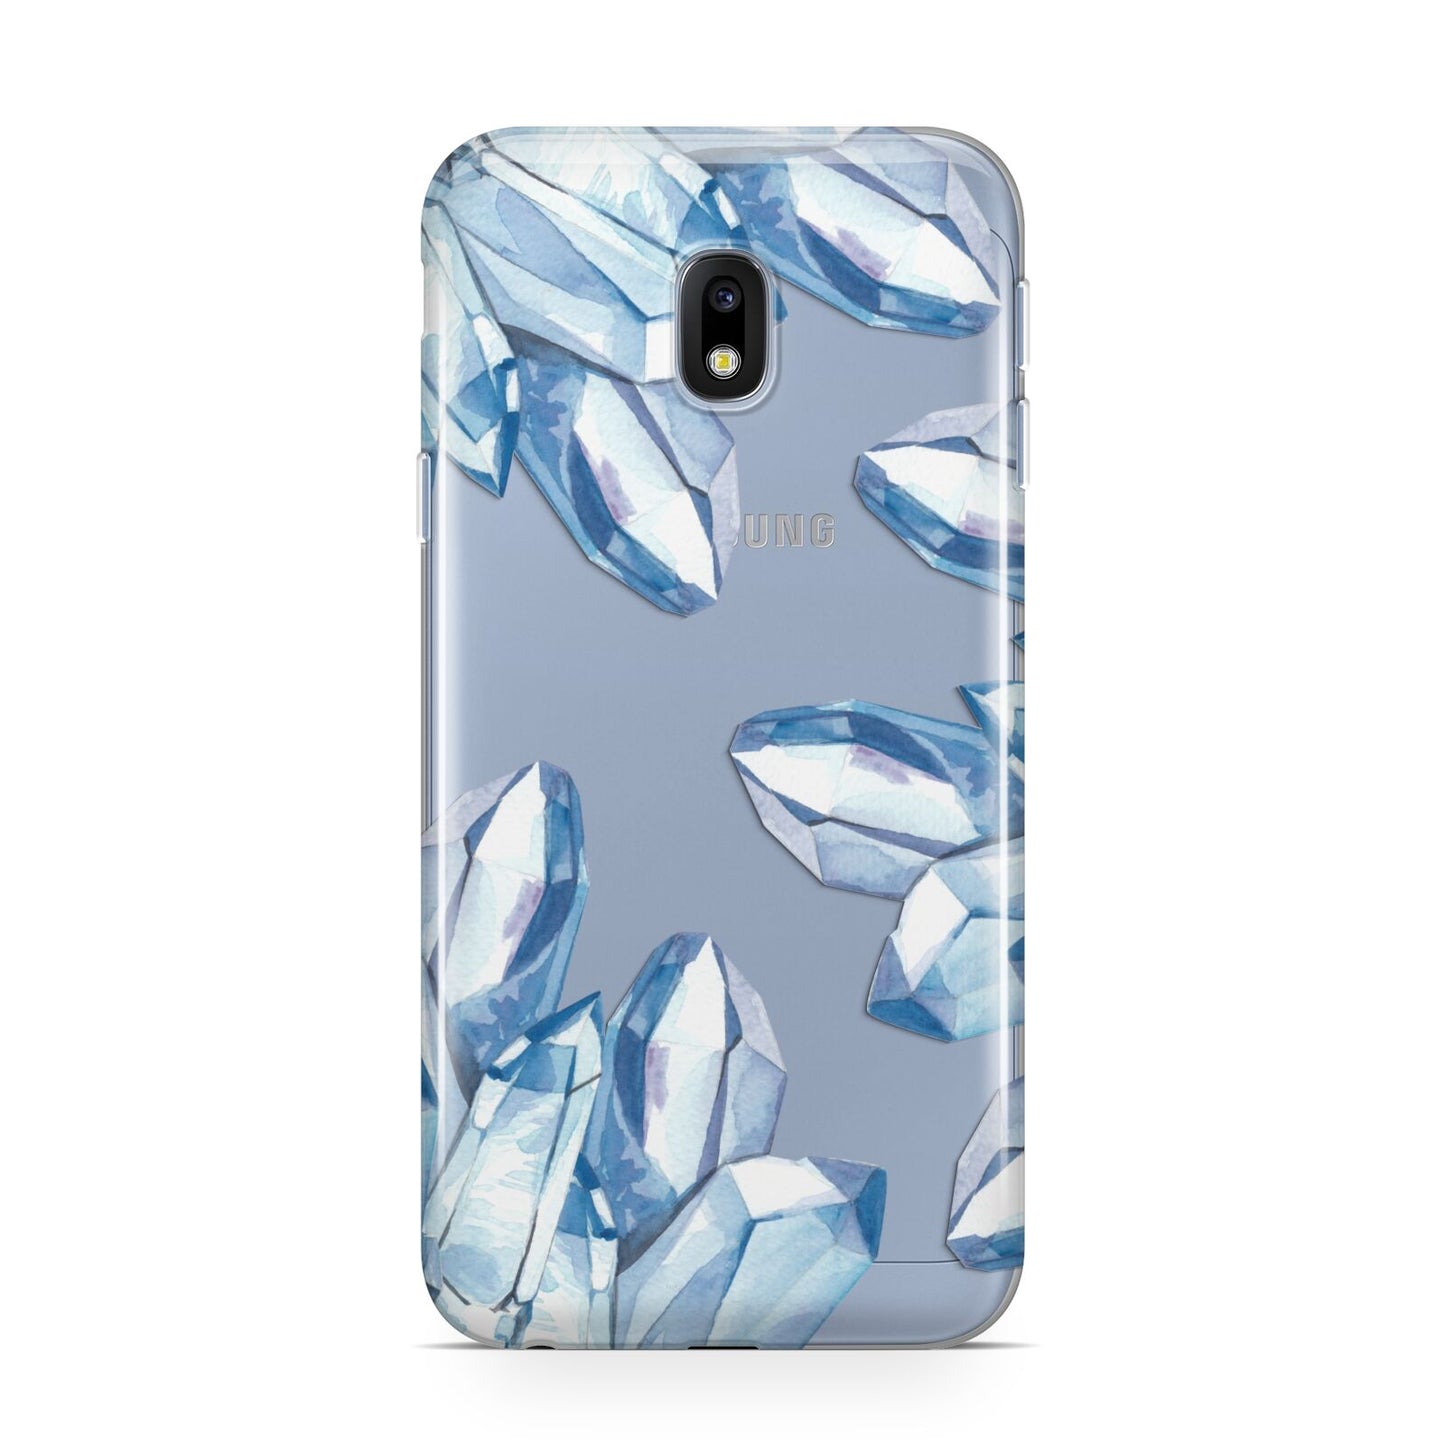 Blue Crystals Samsung Galaxy J3 2017 Case